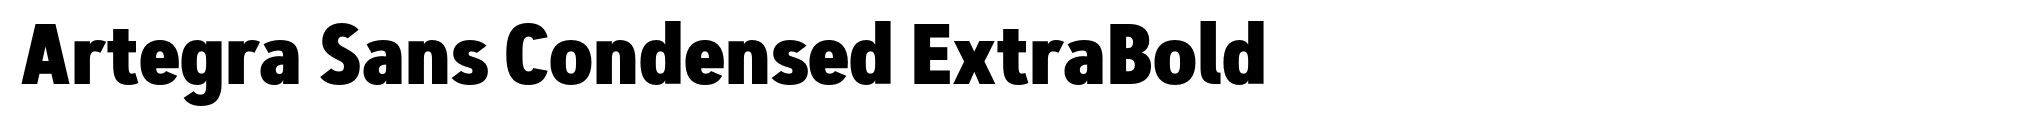 Artegra Sans Condensed ExtraBold image